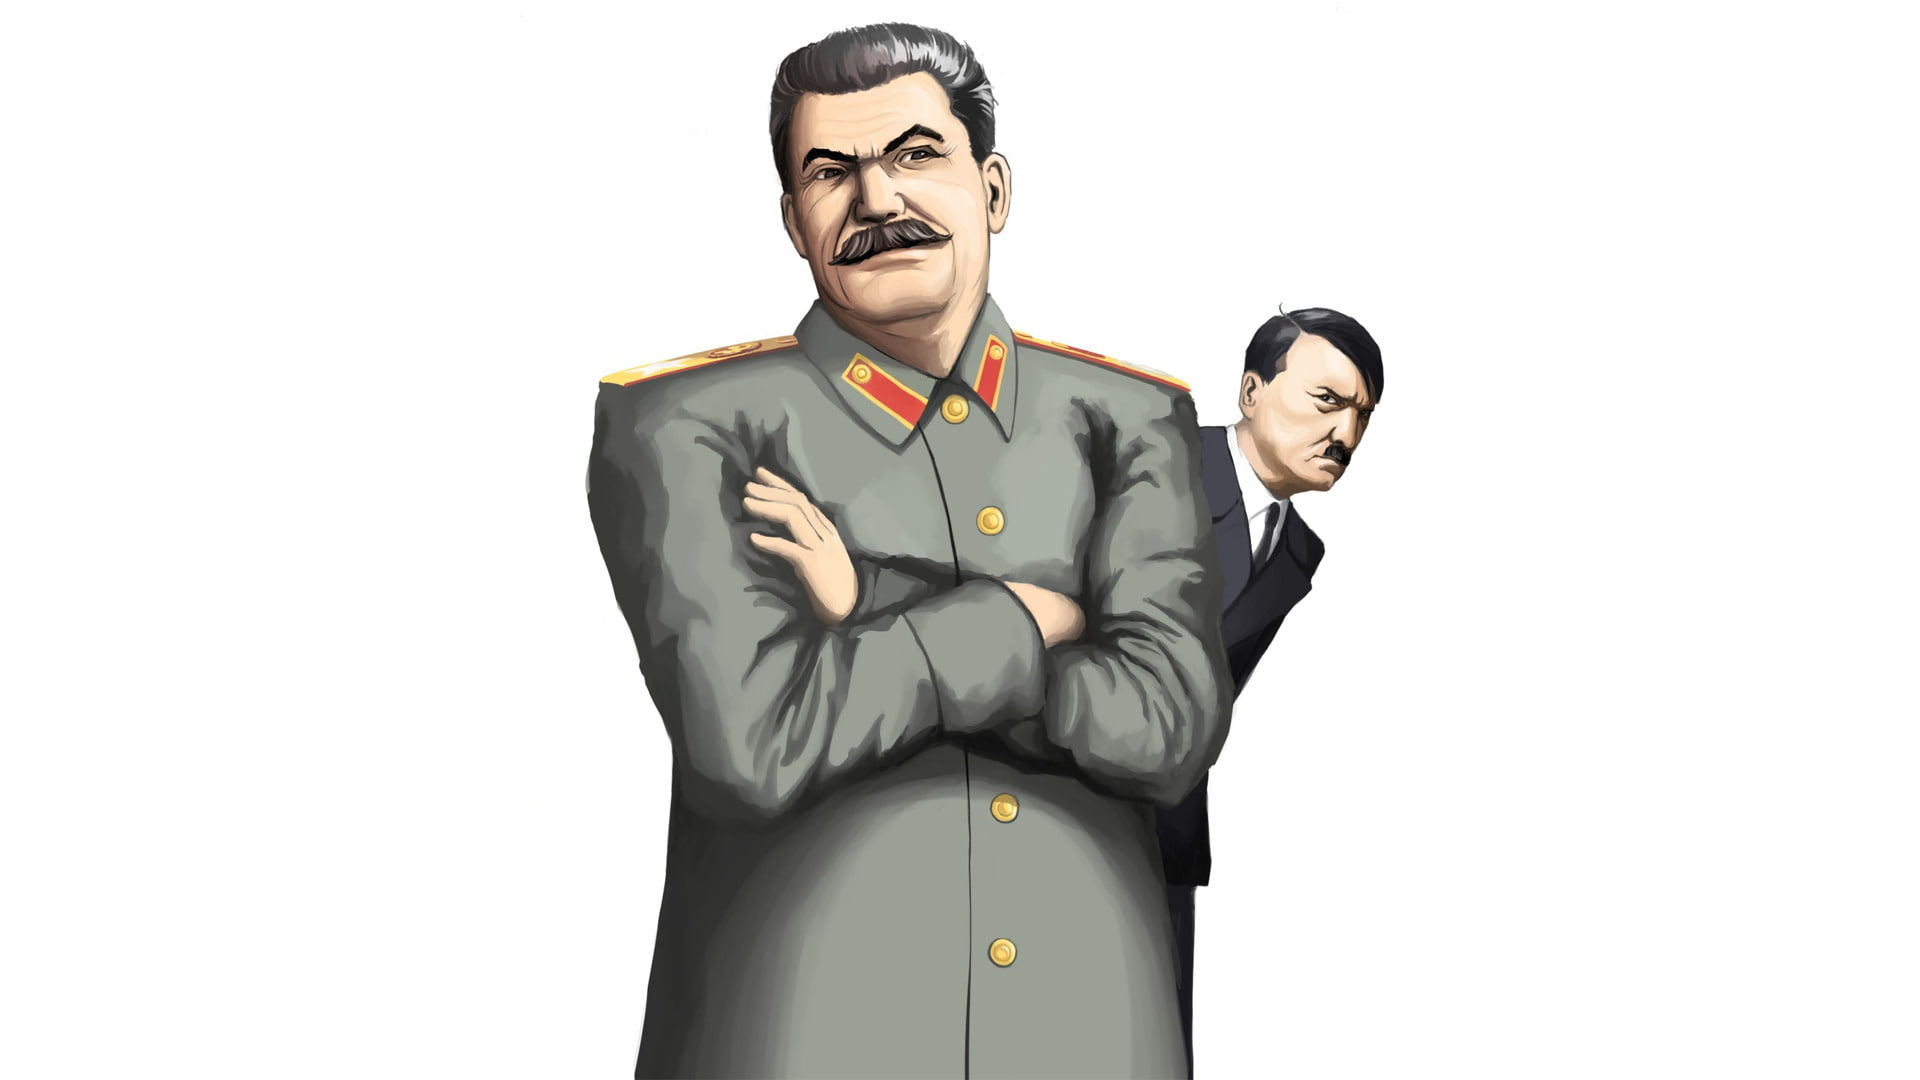 Humor, Sadic, Hitler, Joseph Stalin, Nazi